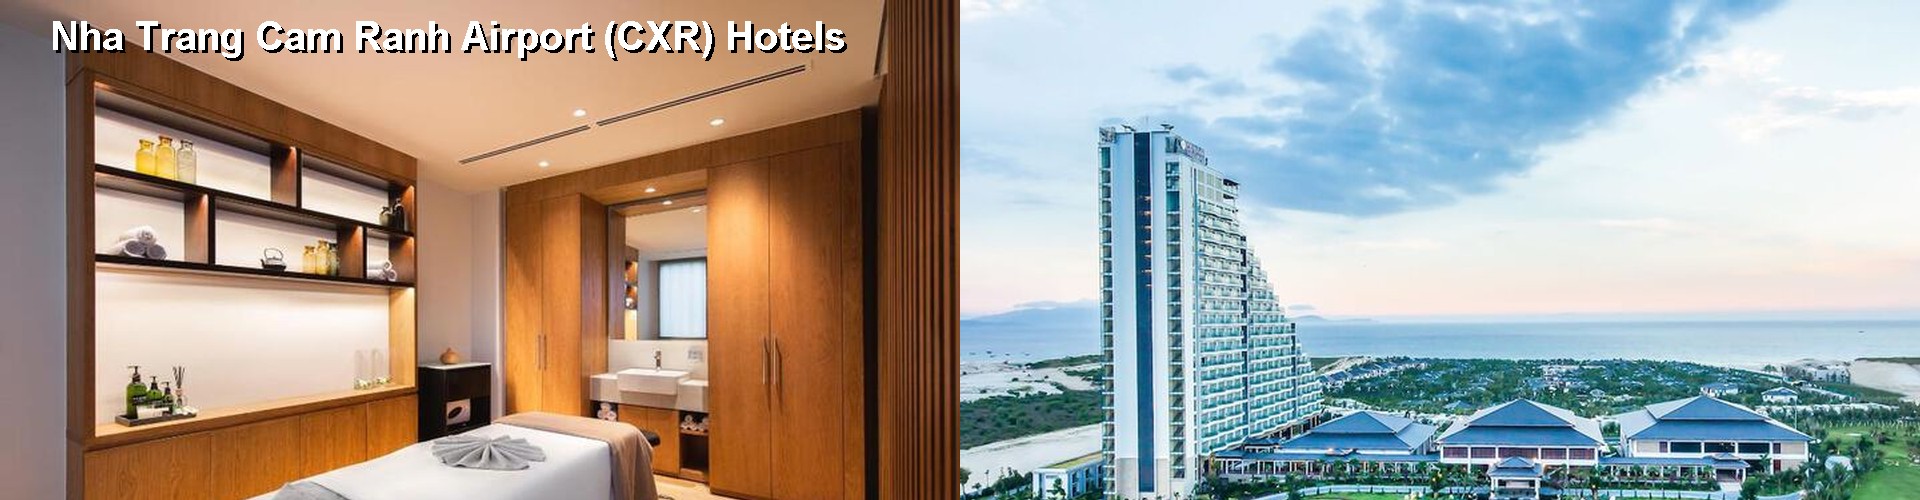 4 Best Hotels near Nha Trang Cam Ranh Airport (CXR)